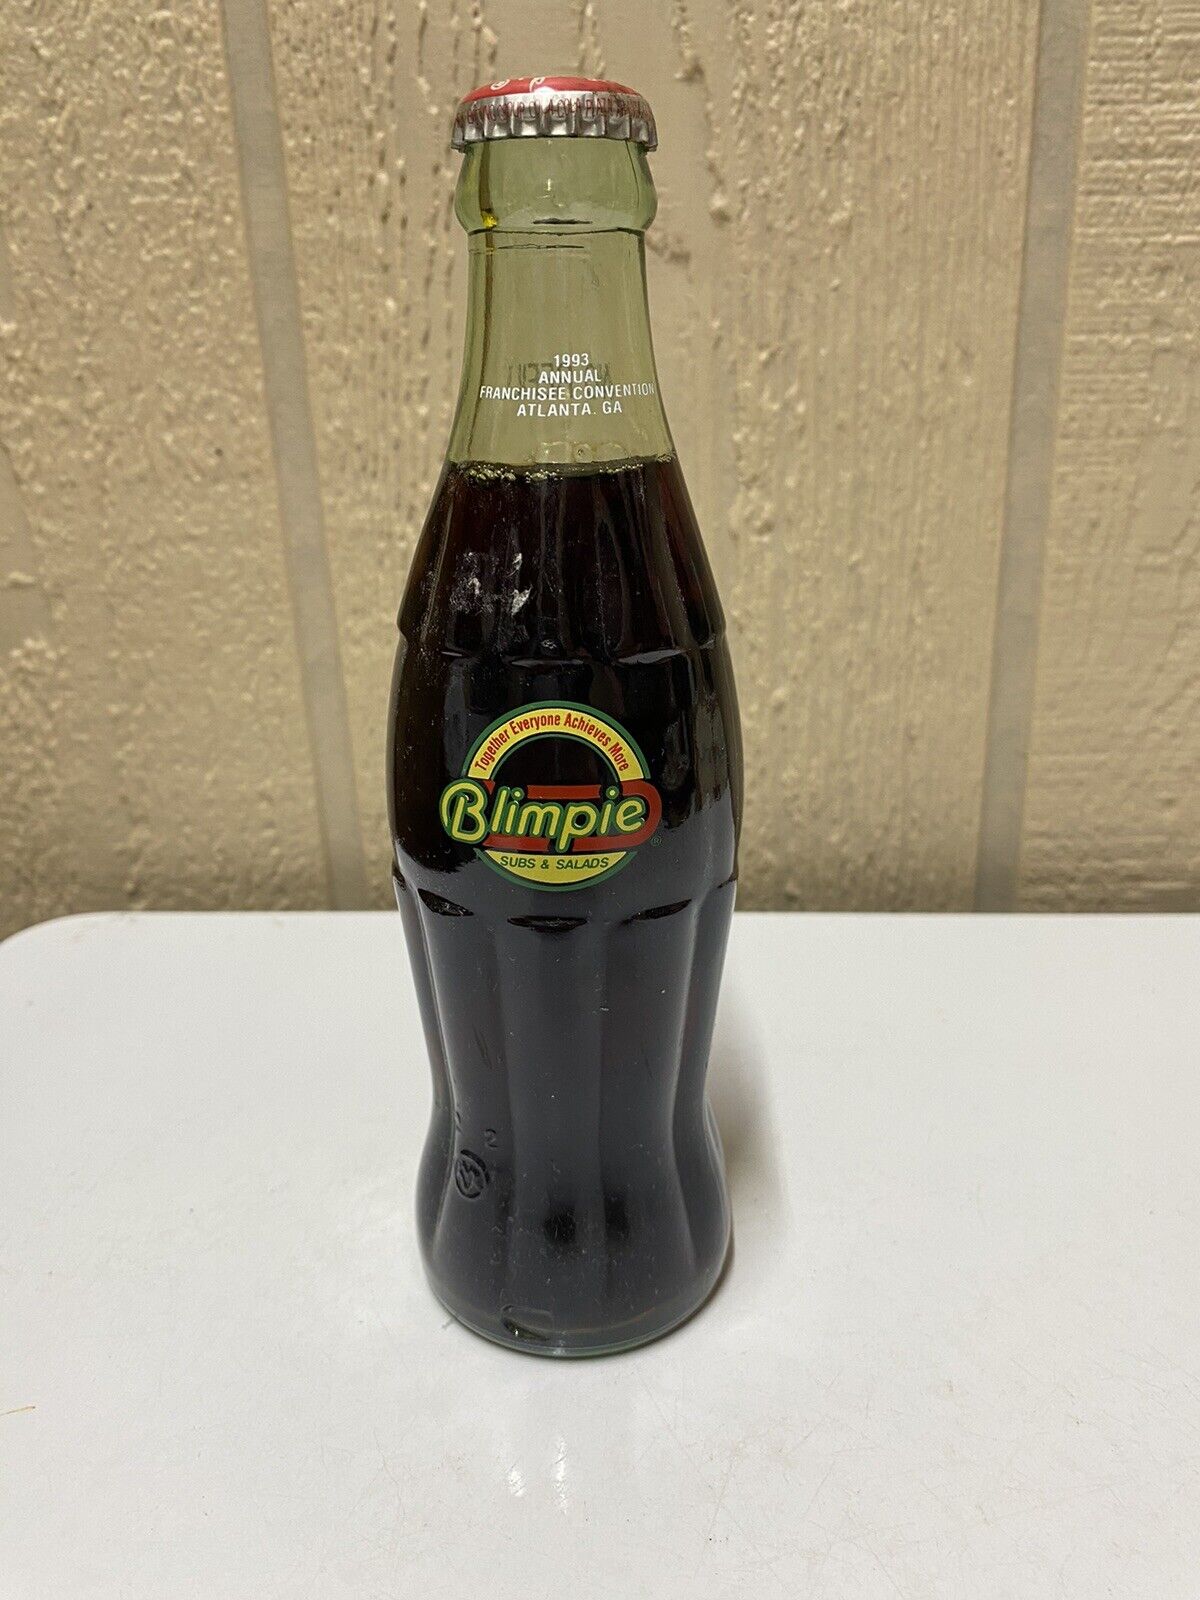 *HTF 1993 Blimpie Subs & Salads Franchisee Convention Atlanta Coca Cola Bottle